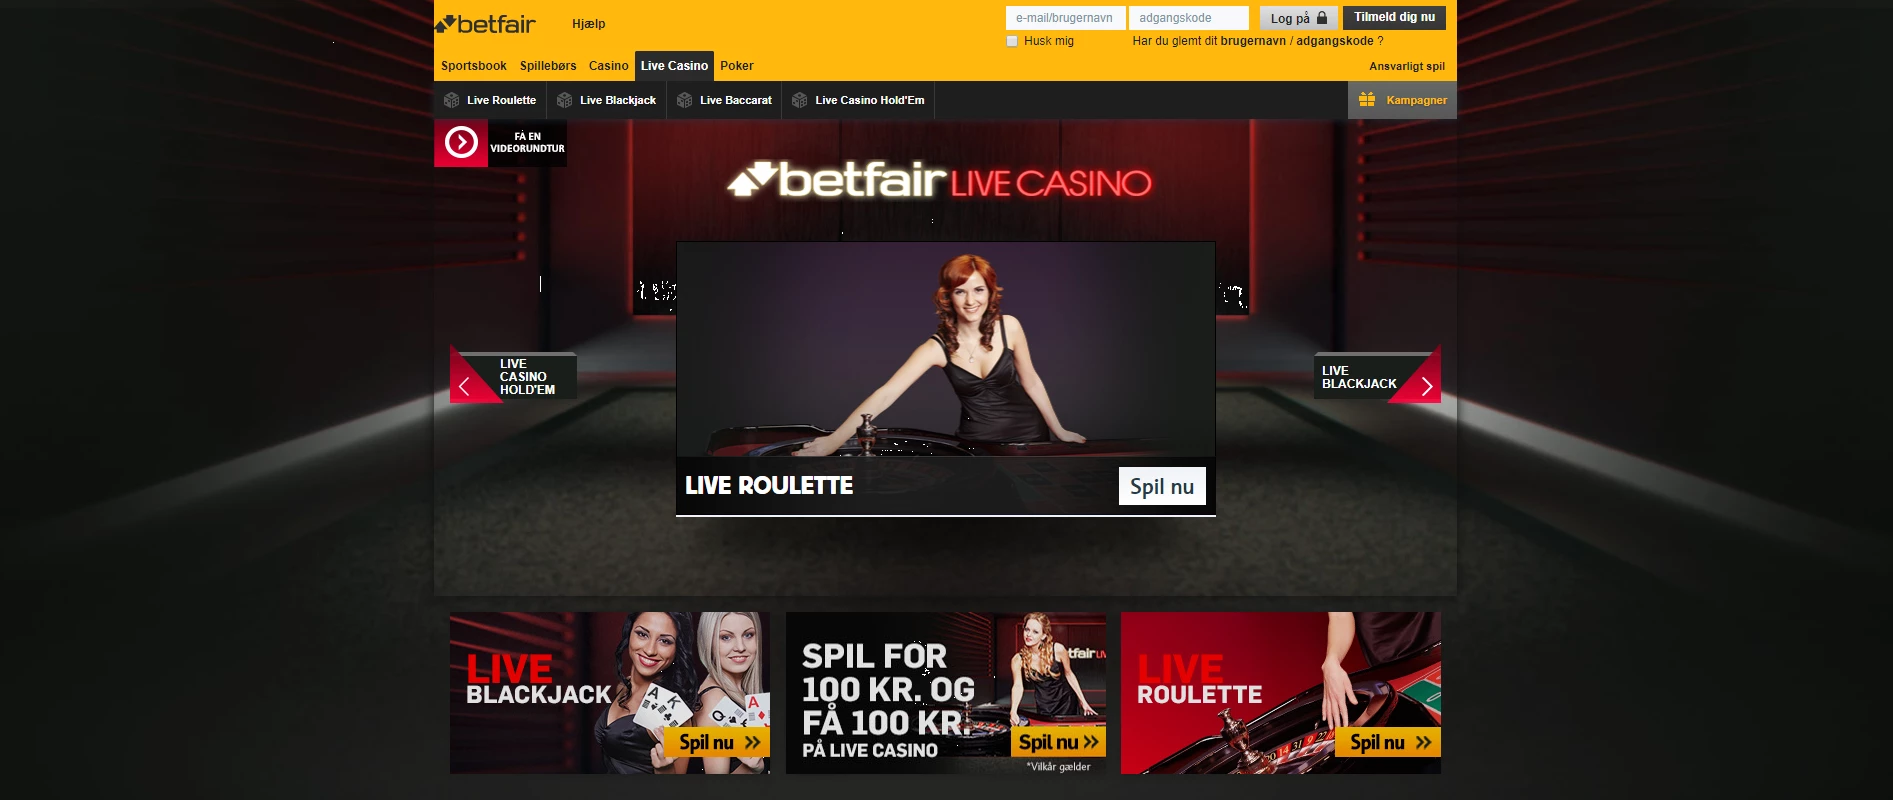 Betfair live casino